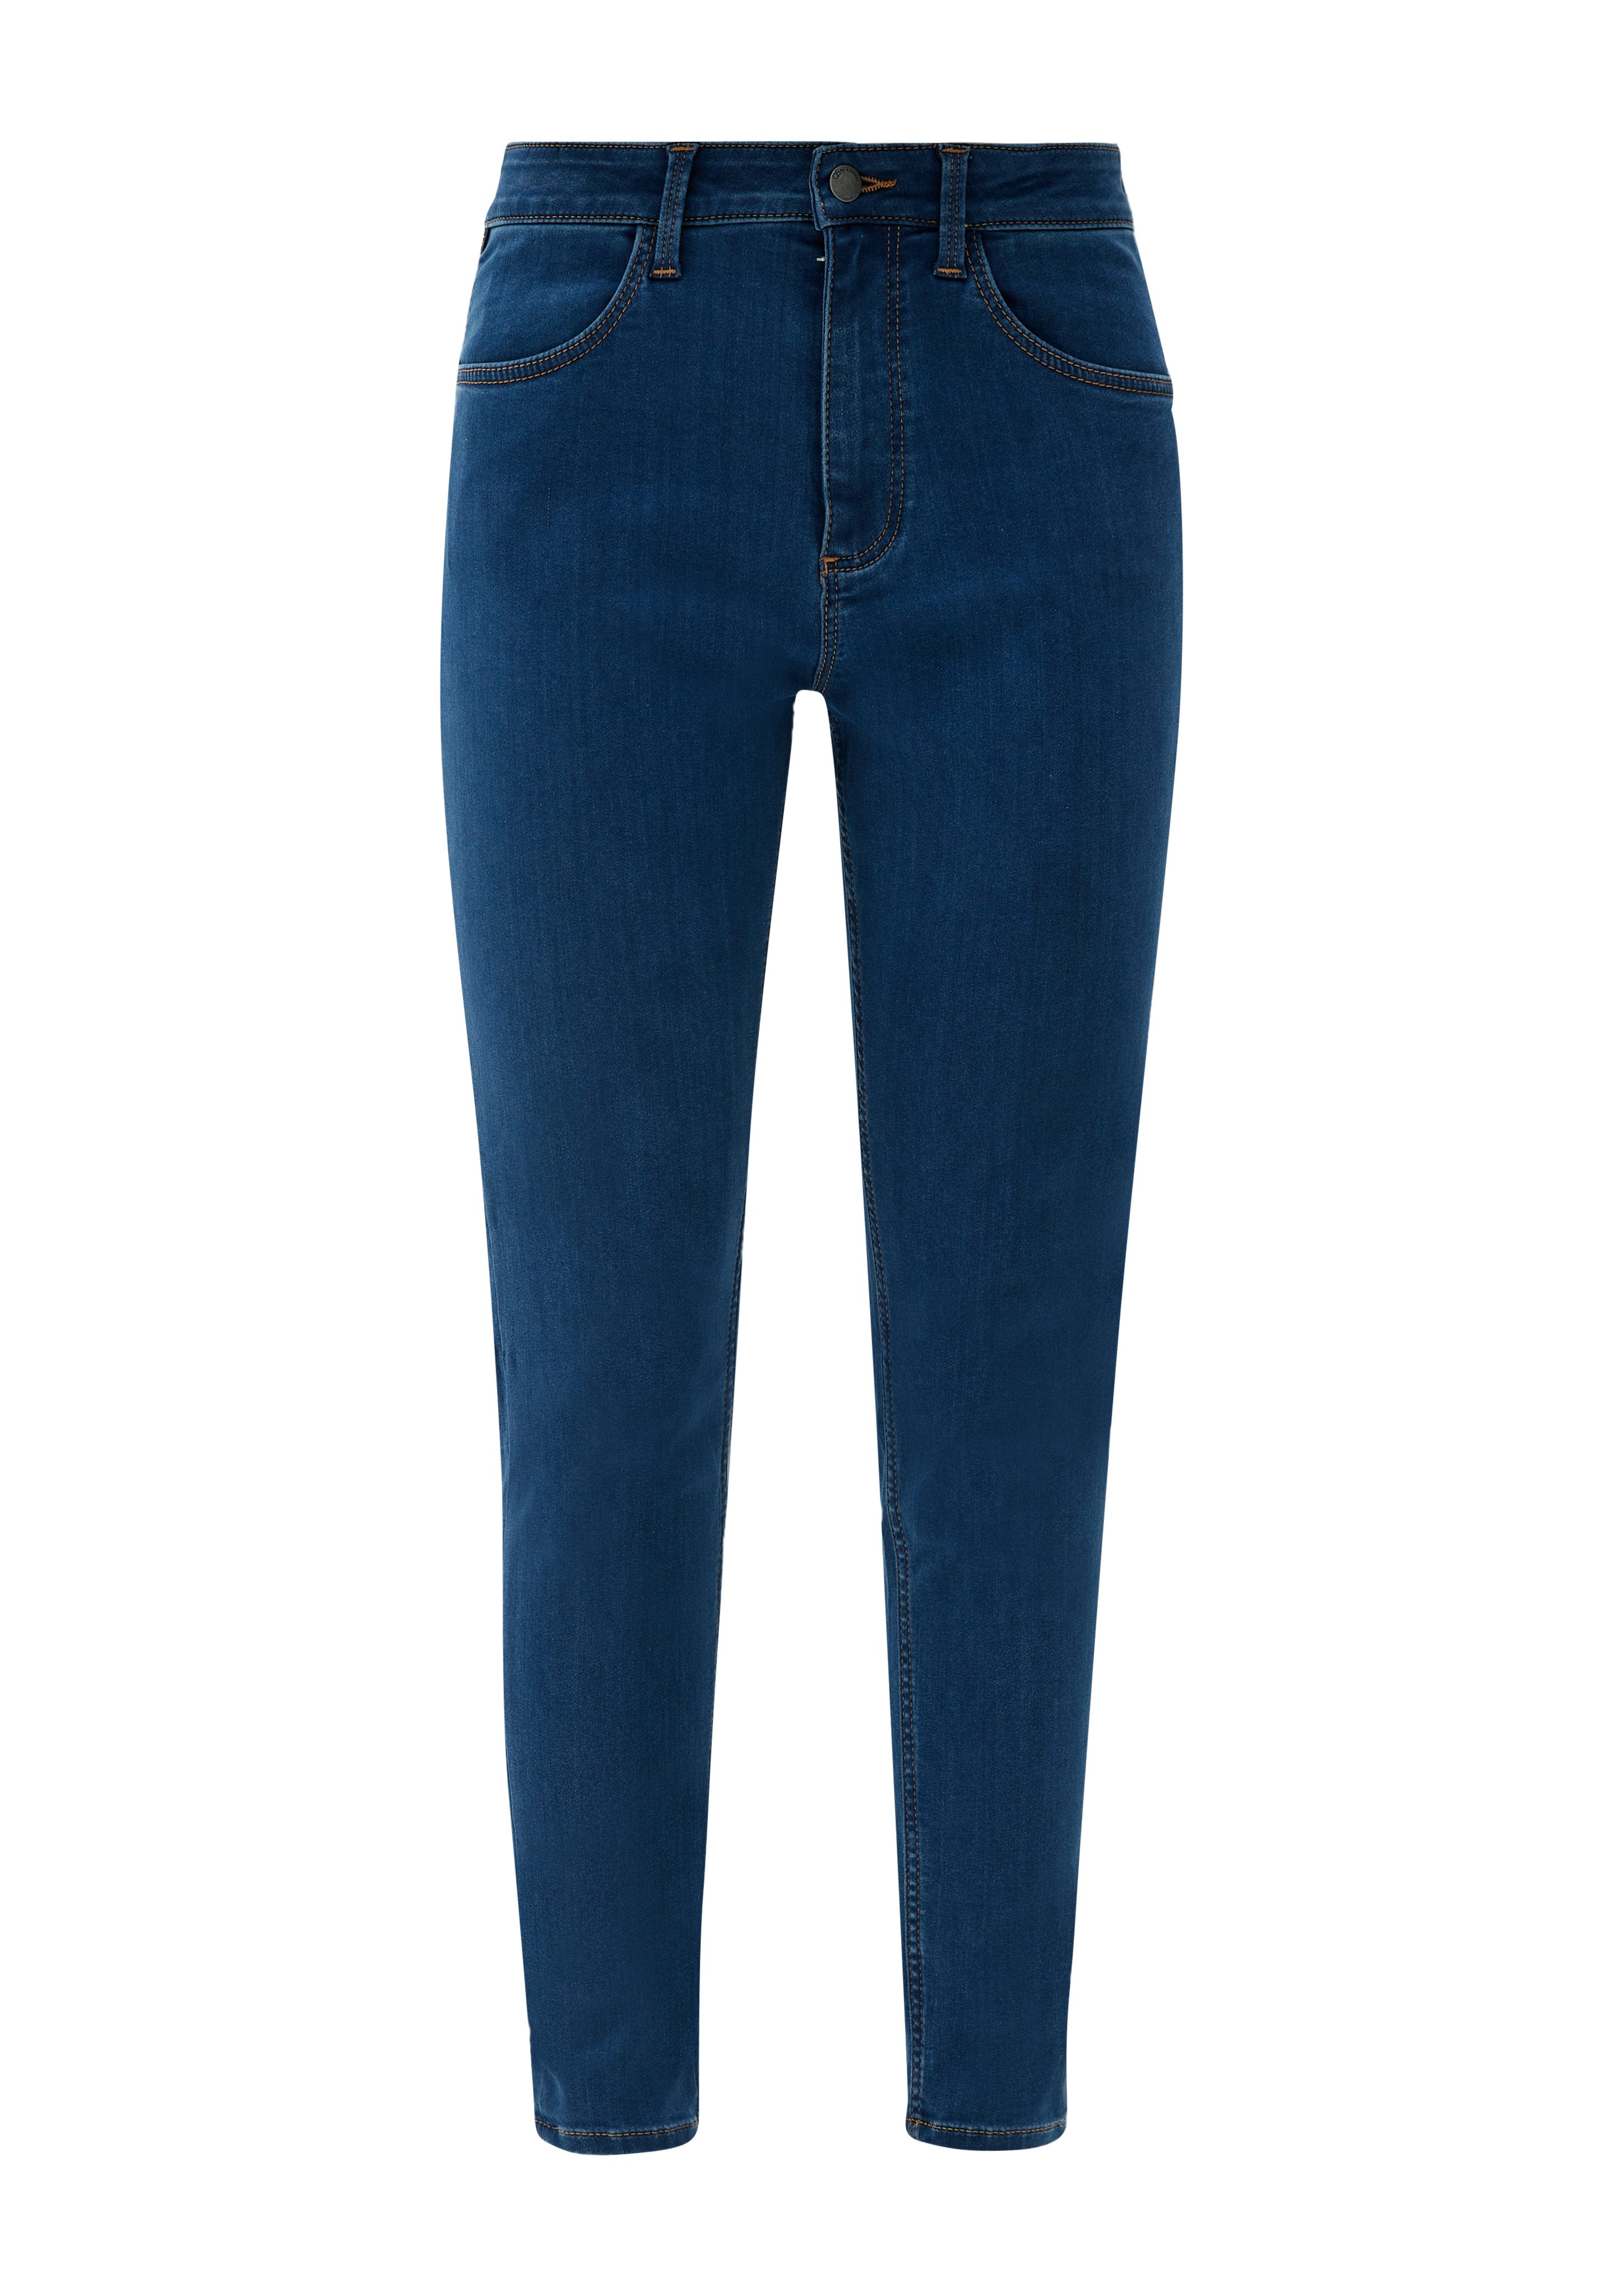 QS 7/8-Hose Ankle-Jeans Sadie / Fit Rise / High blau Leg / Skinny Skinny